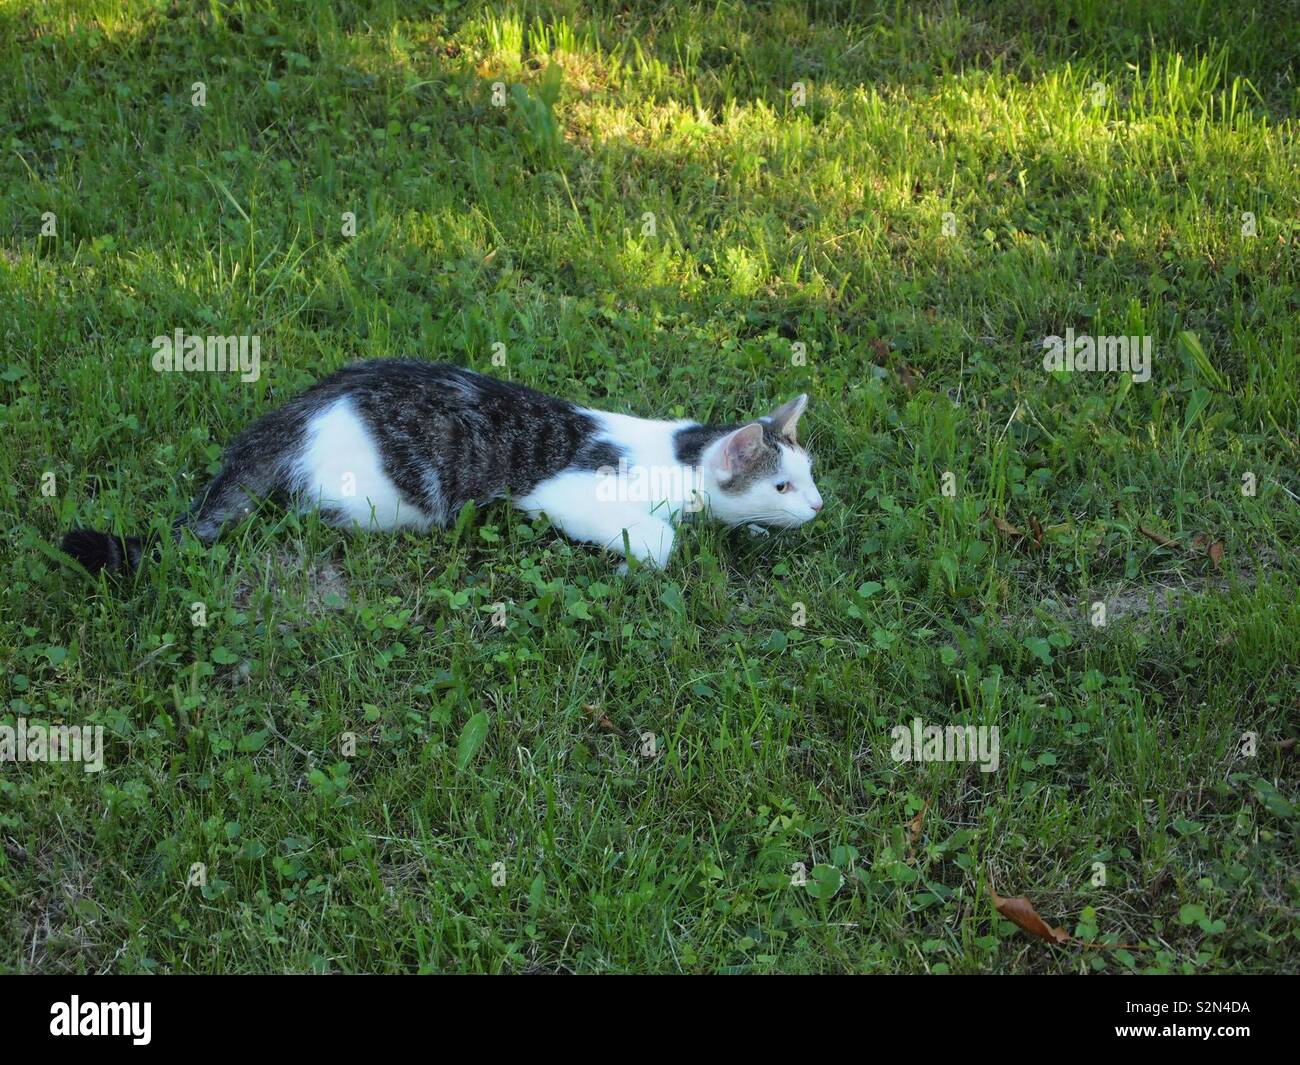 Black And White cat Stockfoto